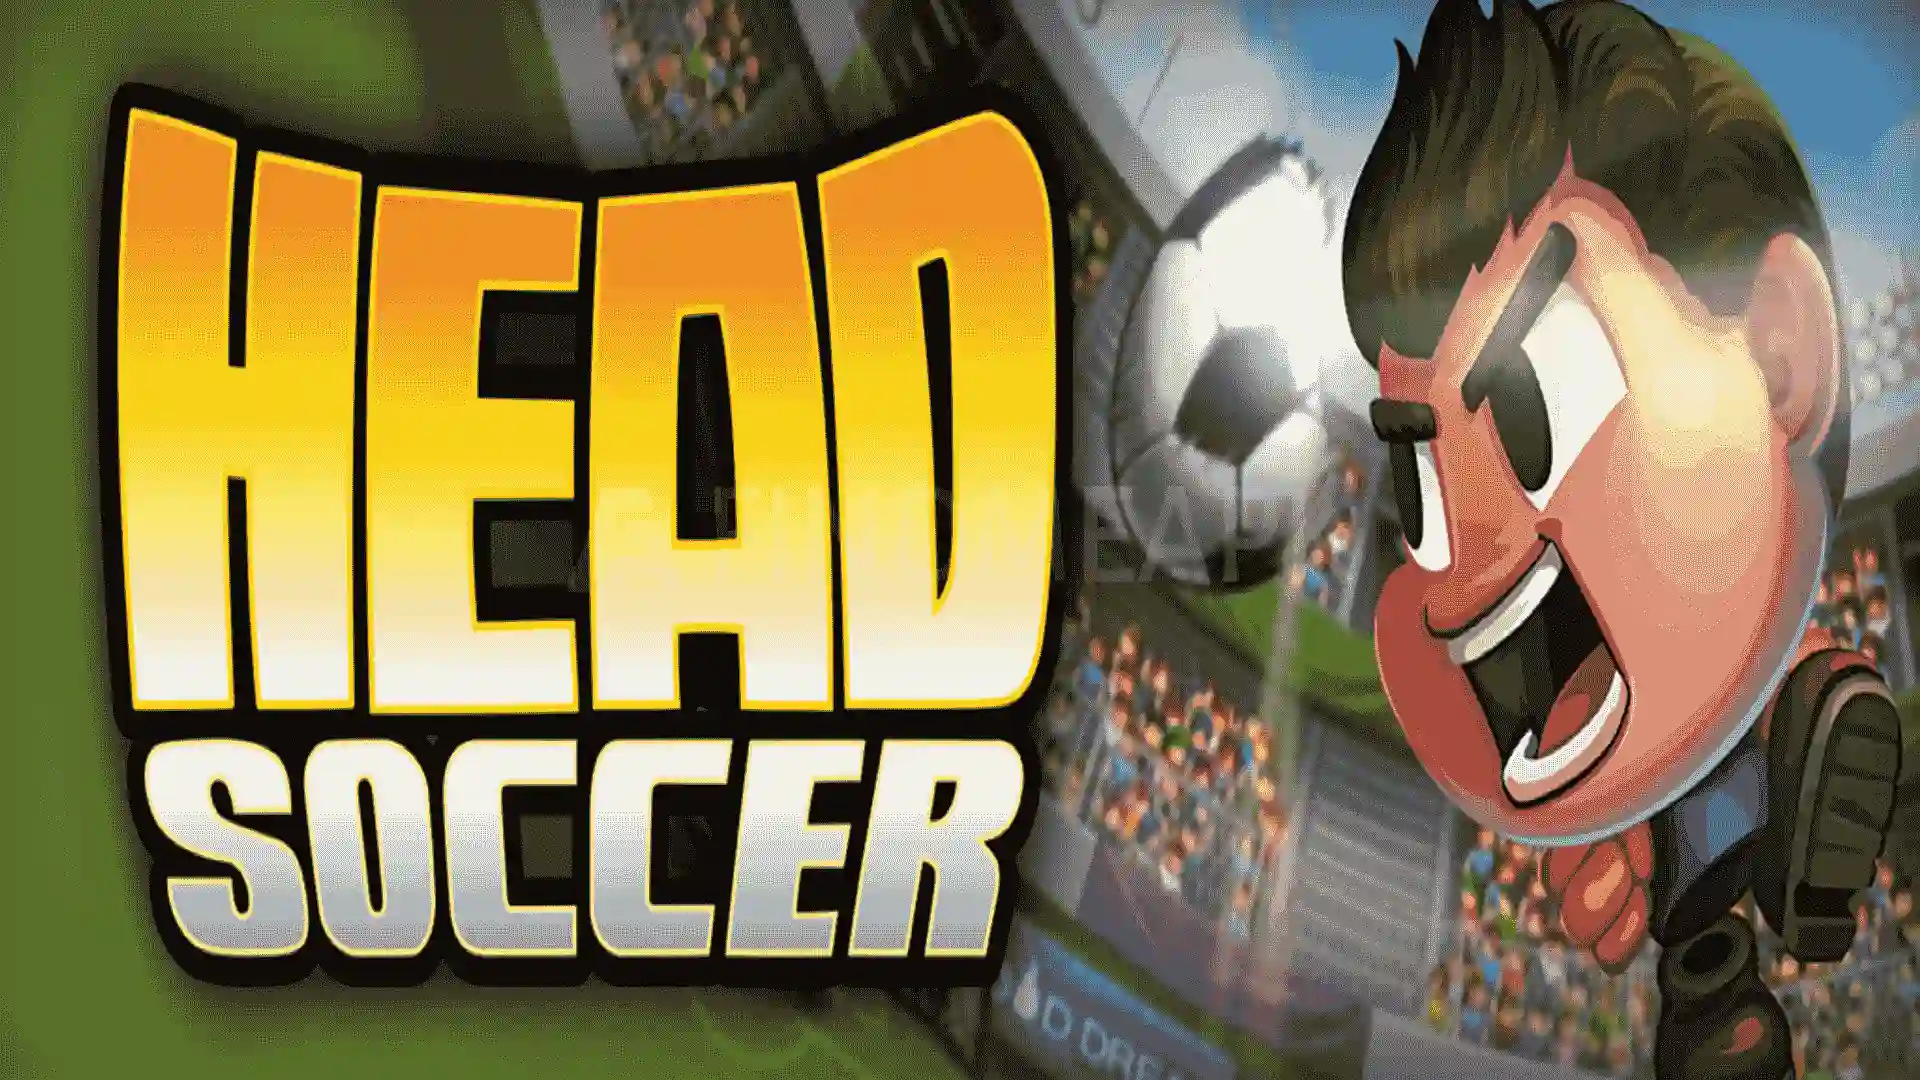 Head Soccer 2022 Full Screen